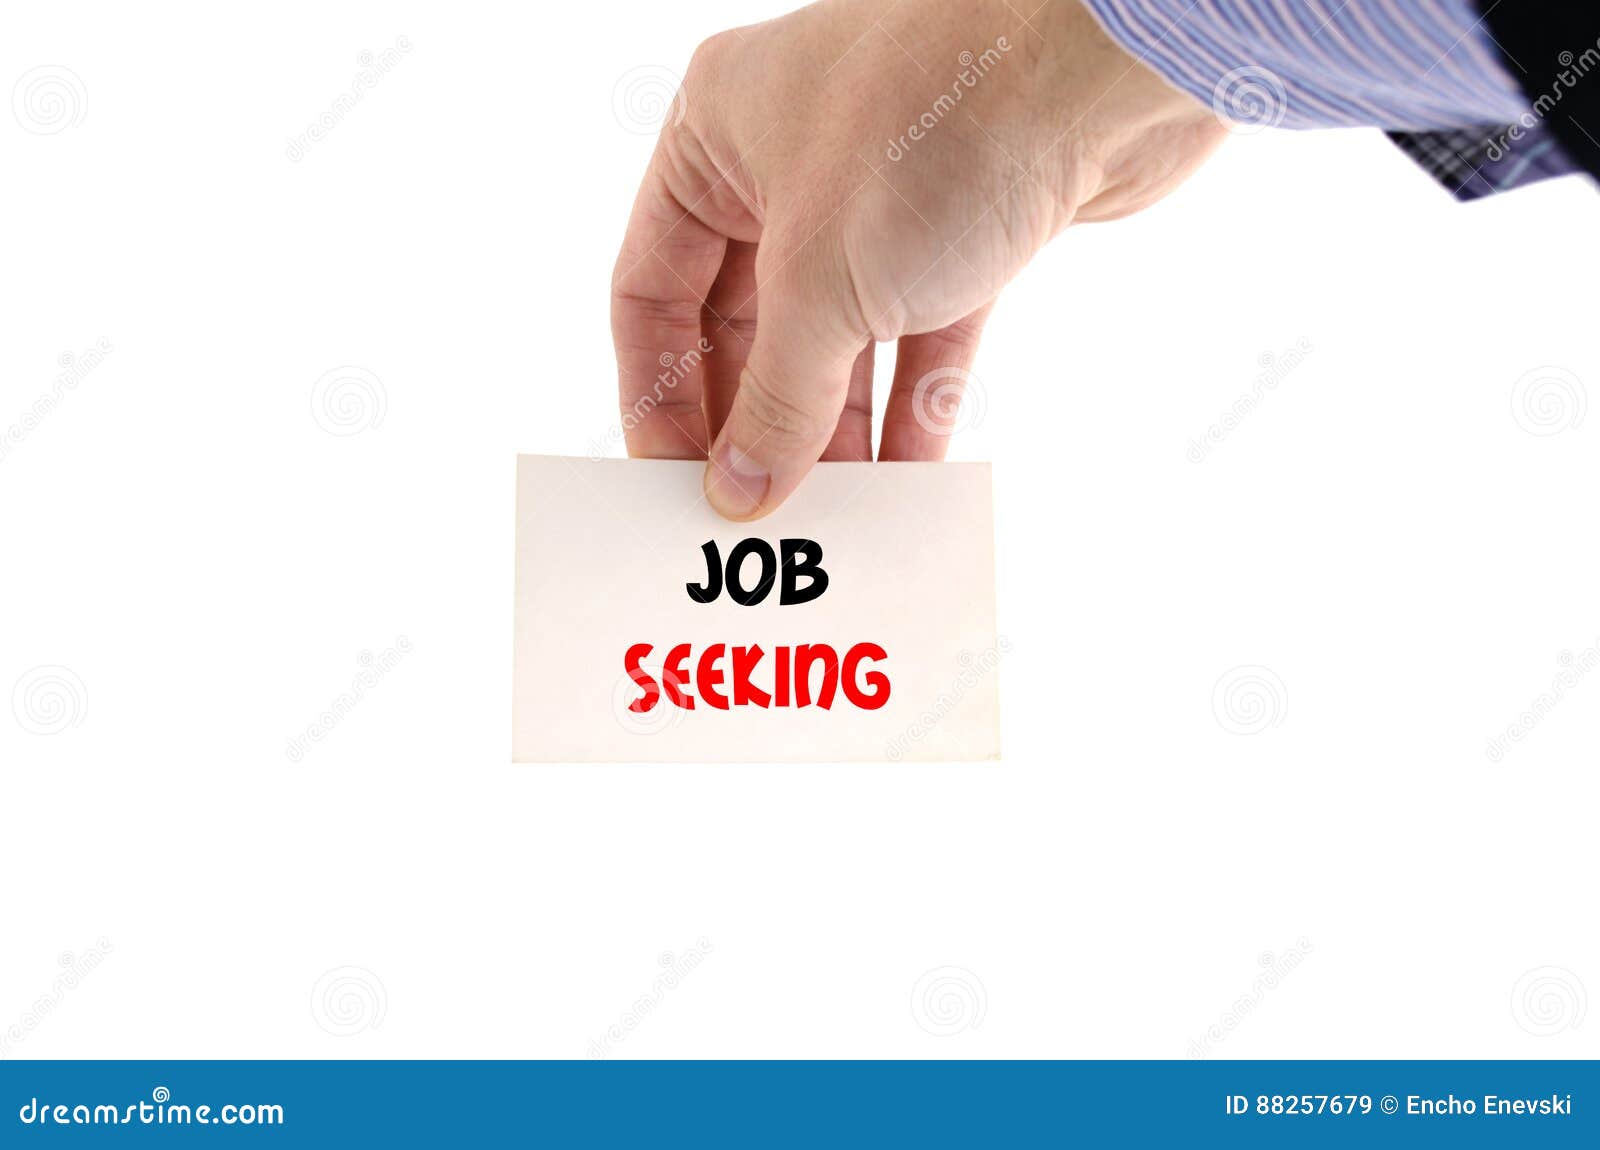 Recruitment Coordinator- Remote Job Kimberly-Clark Austin, TX